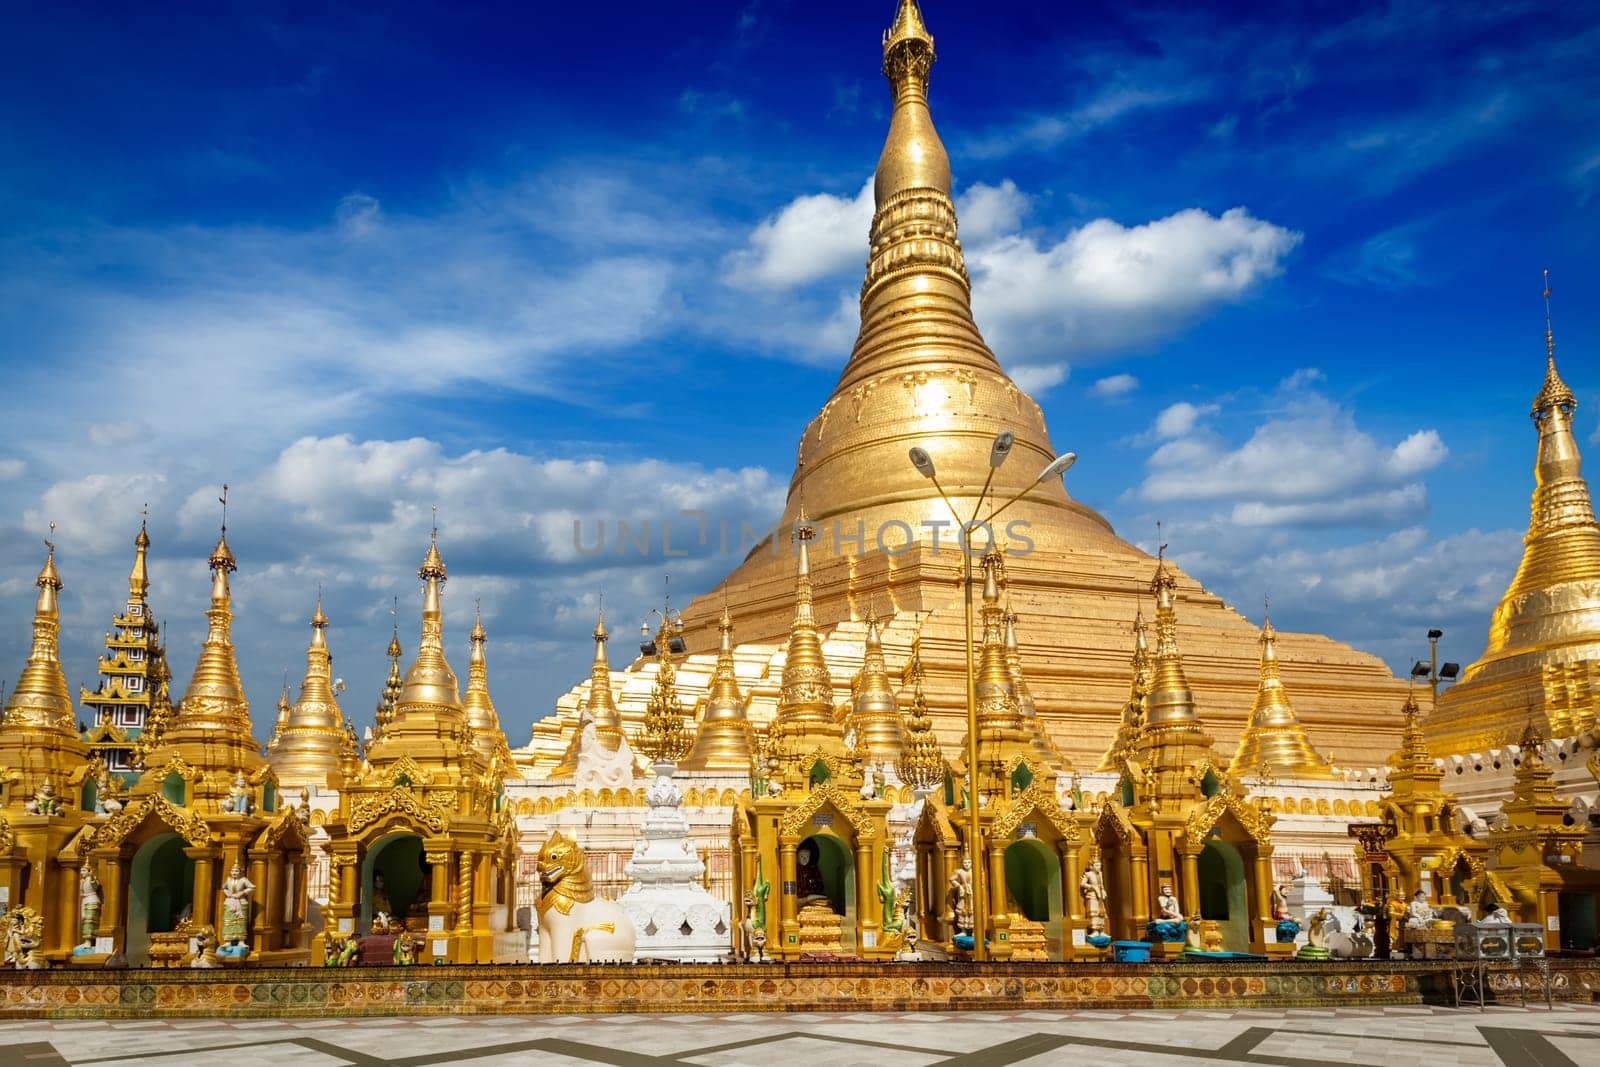 Myanmar famous sacred place and tourist attraction landmark - Shwedagon Paya pagoda. Yangon, Myanmar